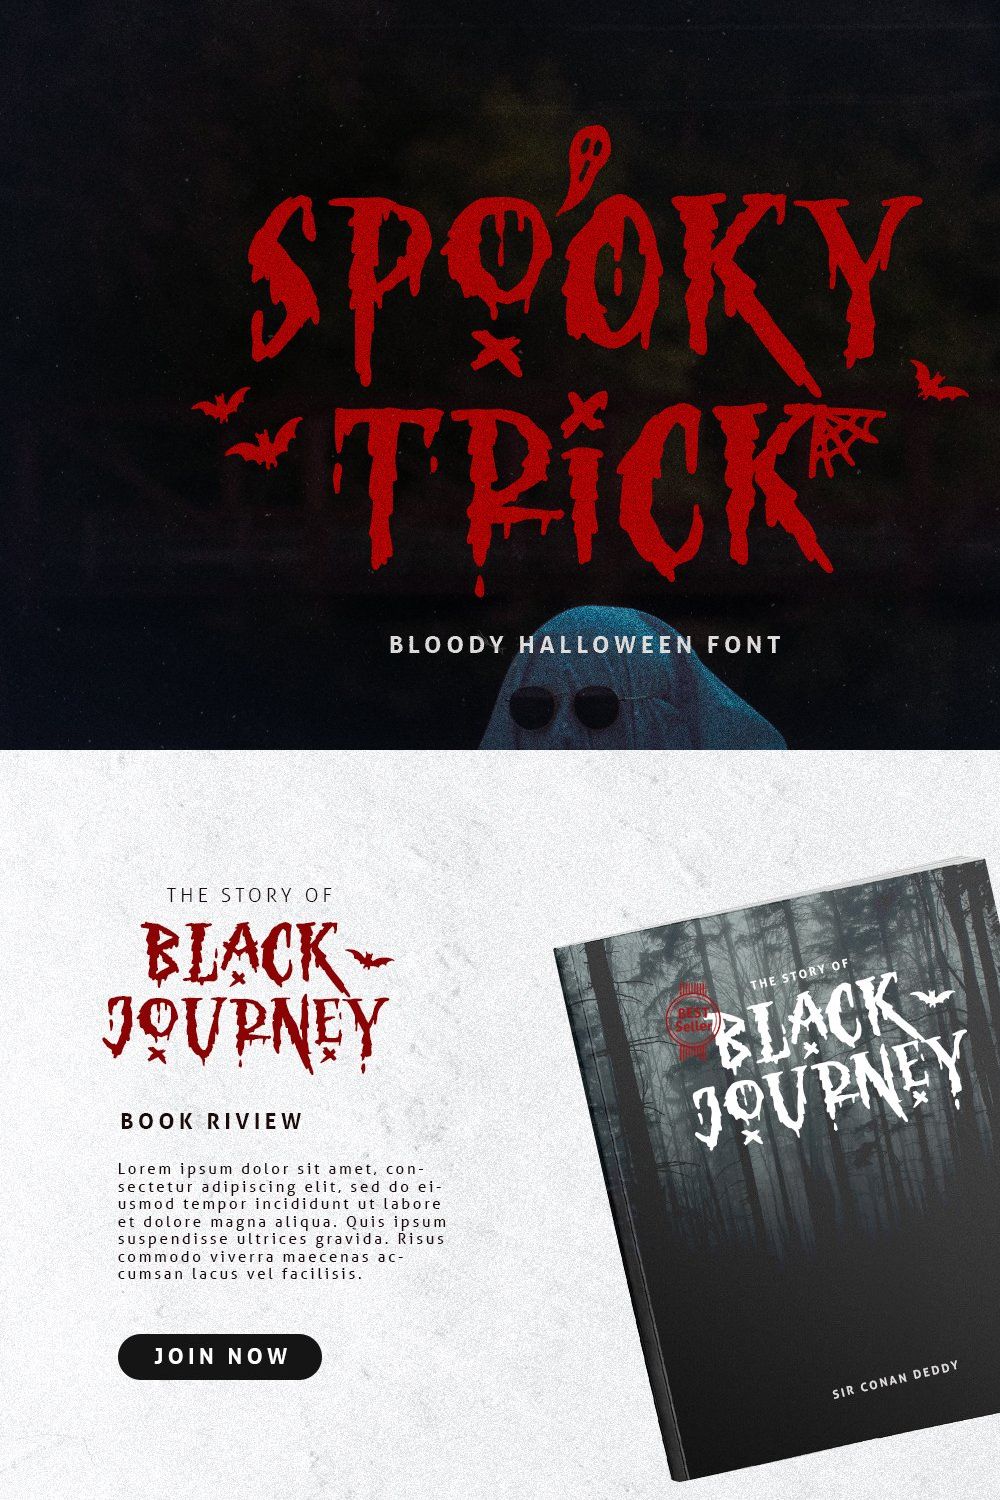 Spooky Trick - Creepy Halloween Font pinterest preview image.